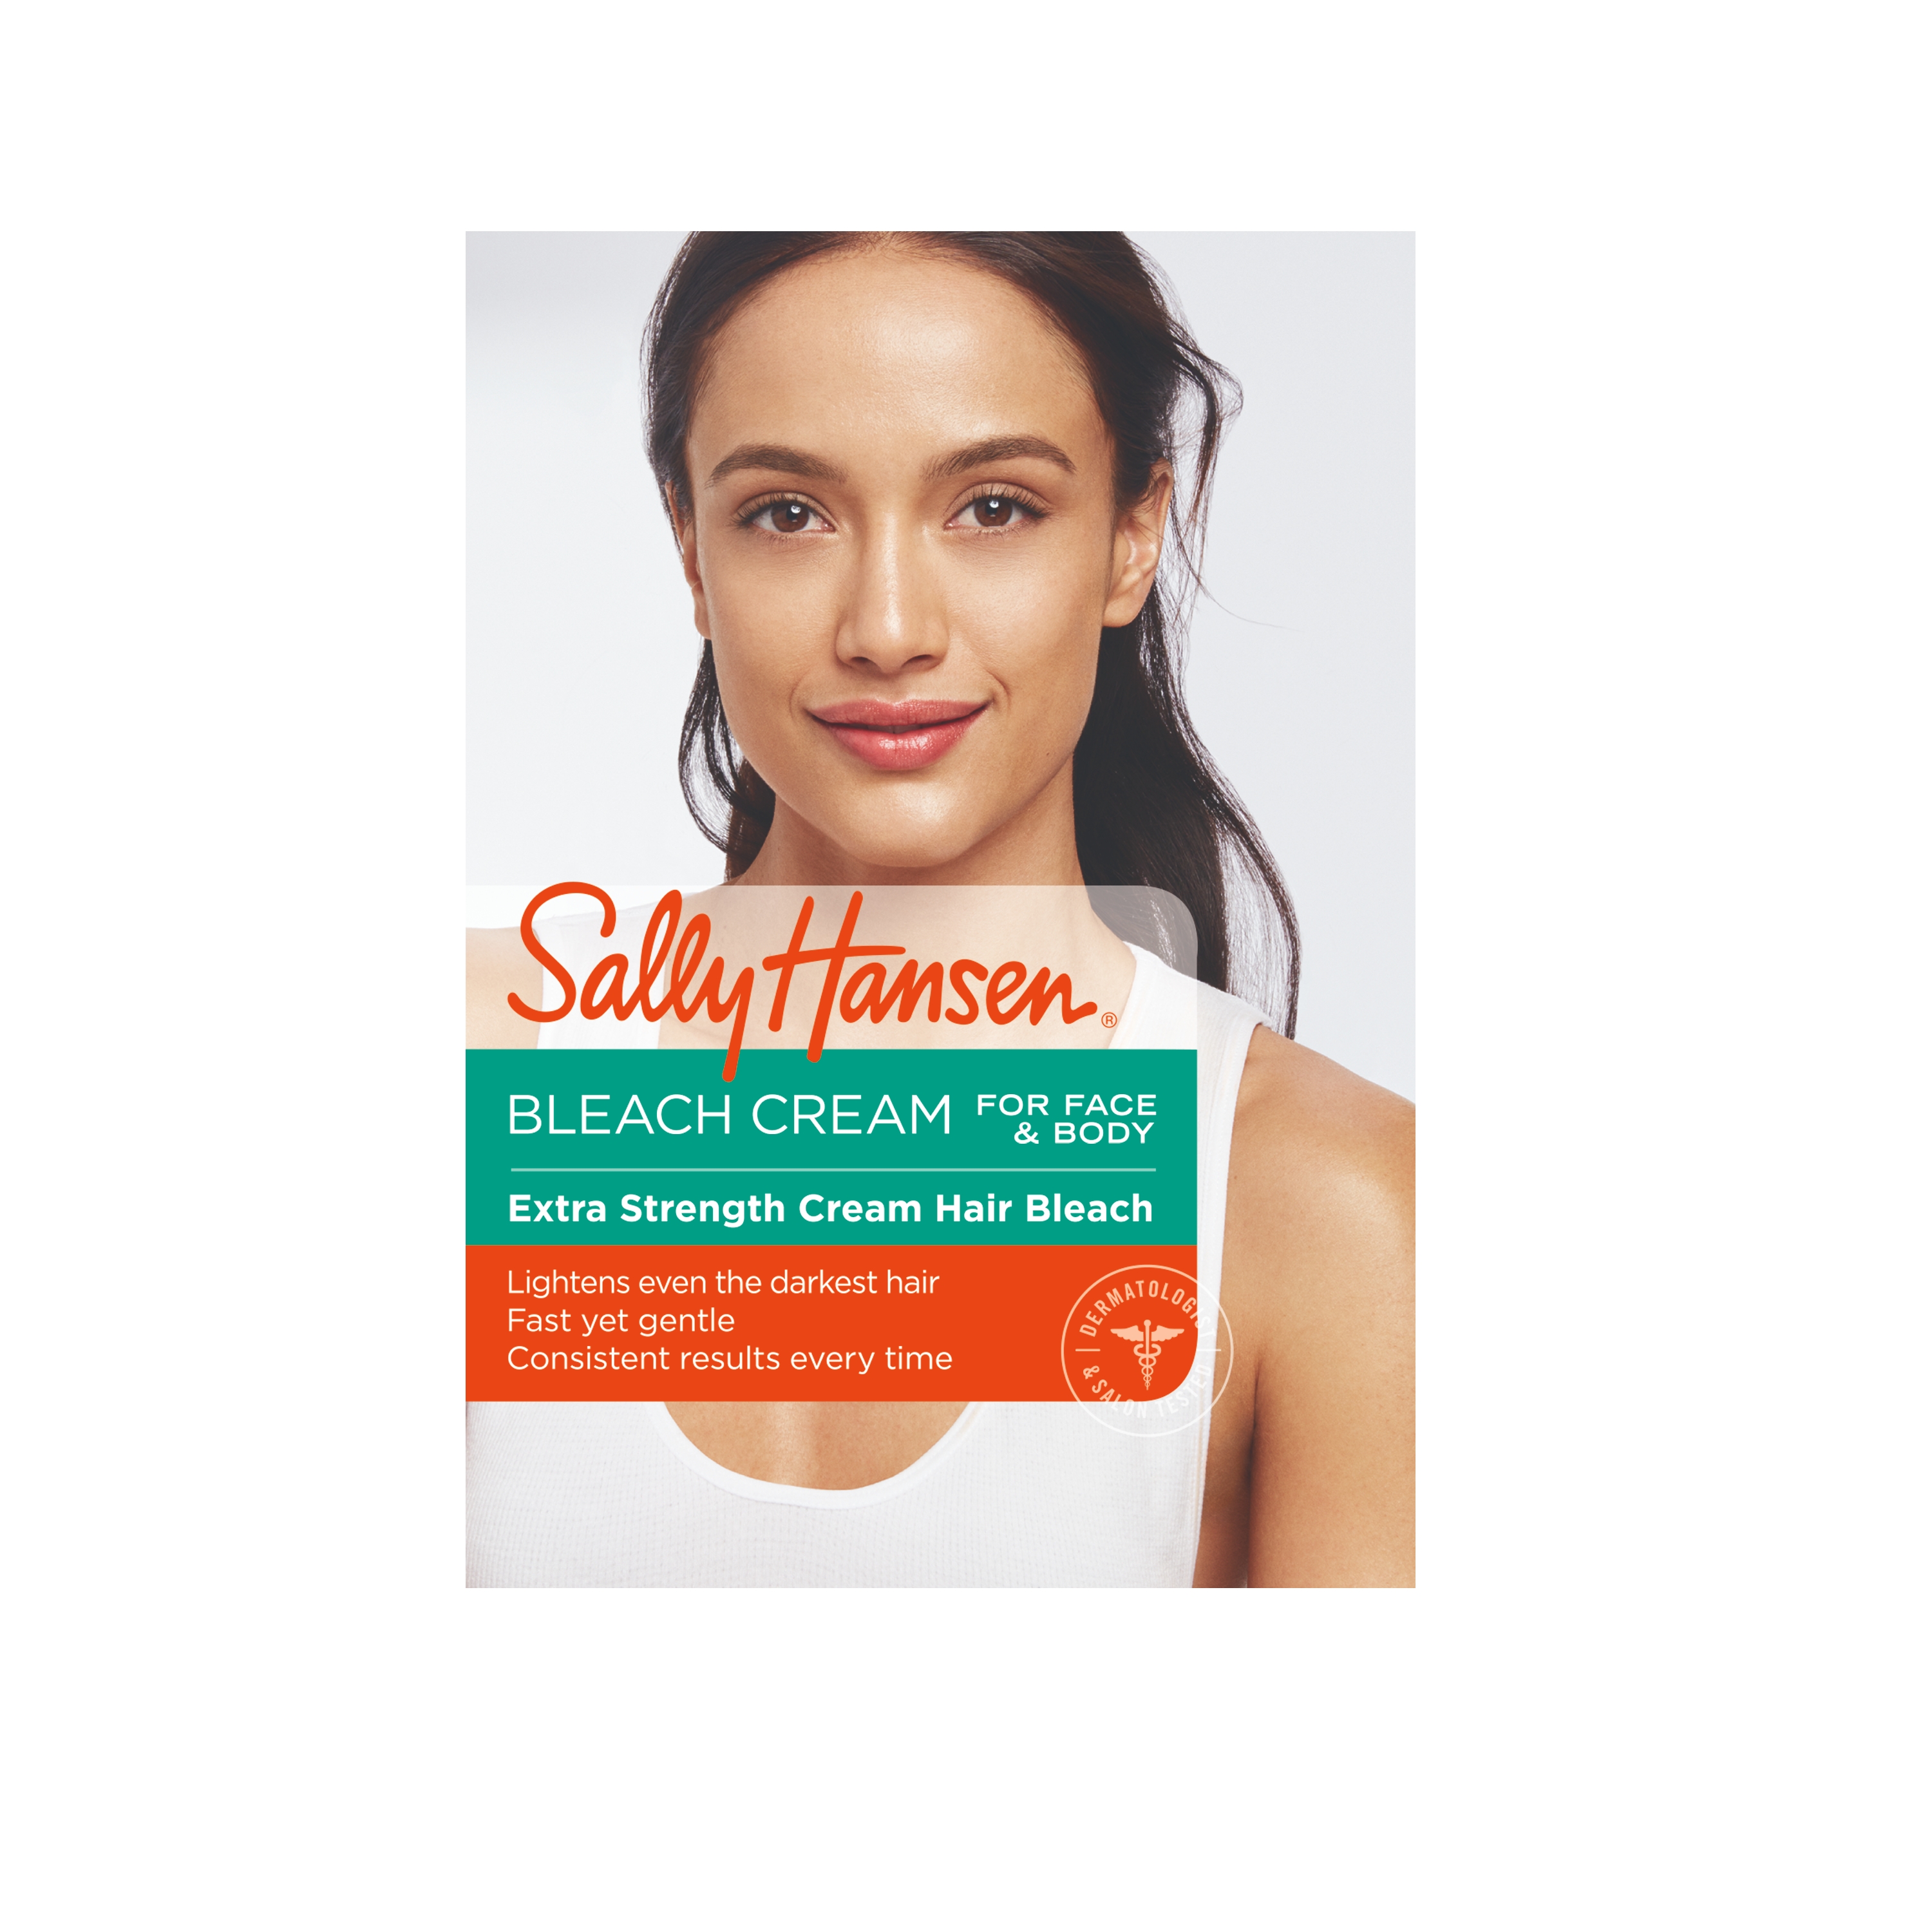 Sally Hansen Extra Strength Creme Hair Bleach For Face & Body Kit, 1.5 oz - image 1 of 4